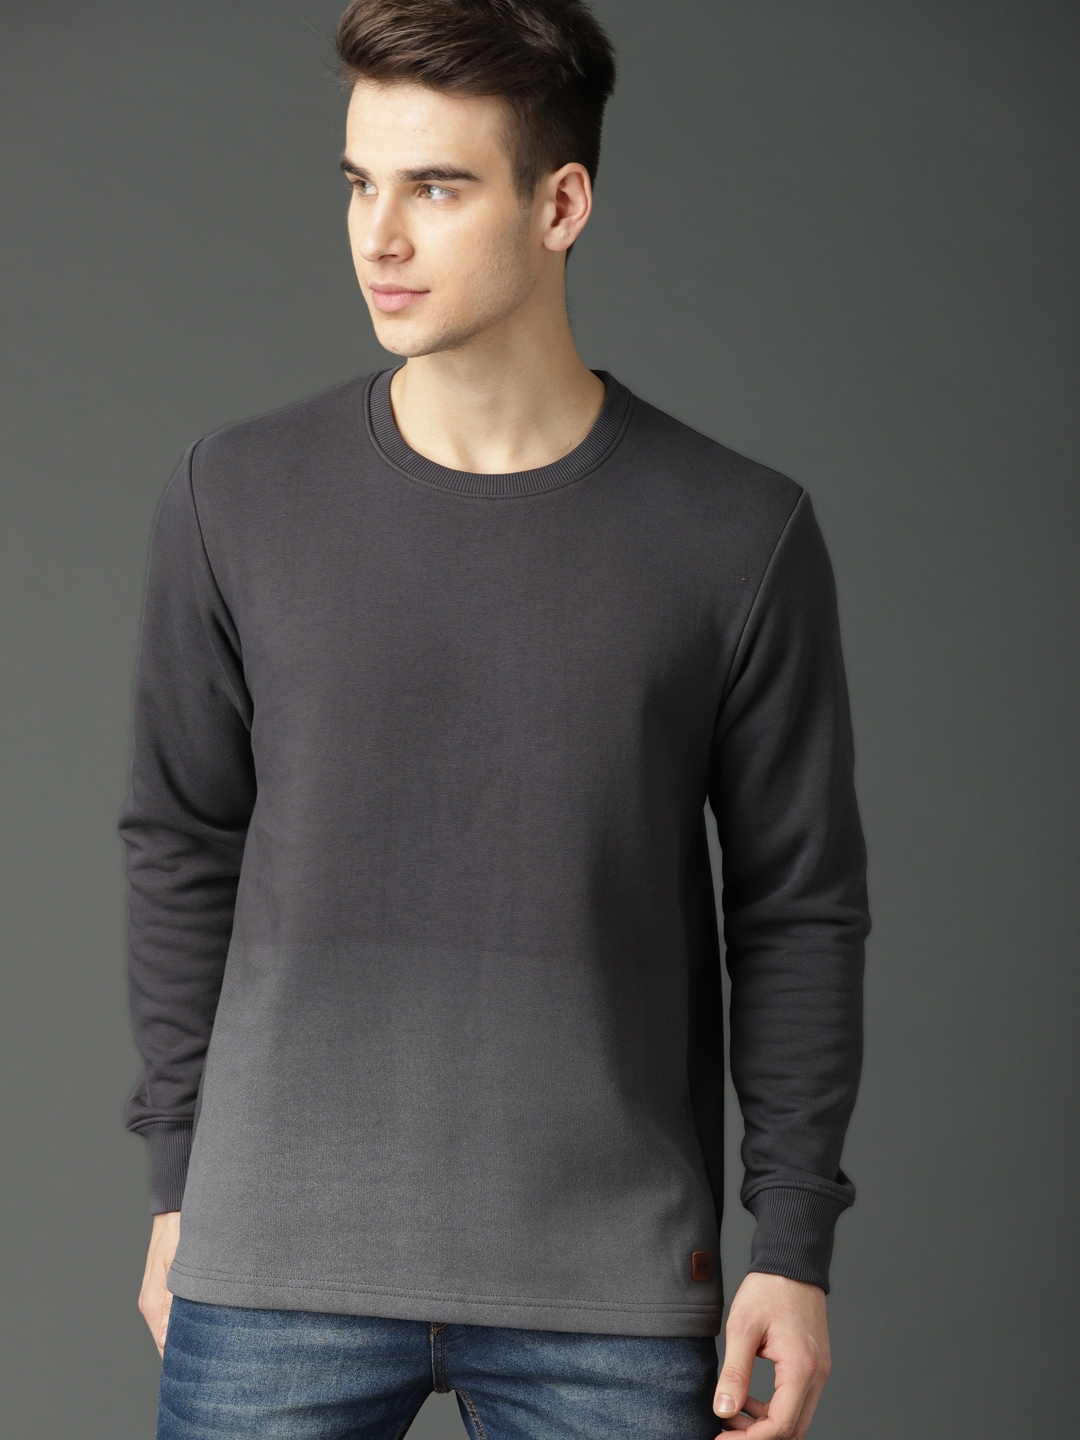 Buy Roadster Men Charcoal Grey Dyed Sweatshirt - Sweatshirts for Men ...